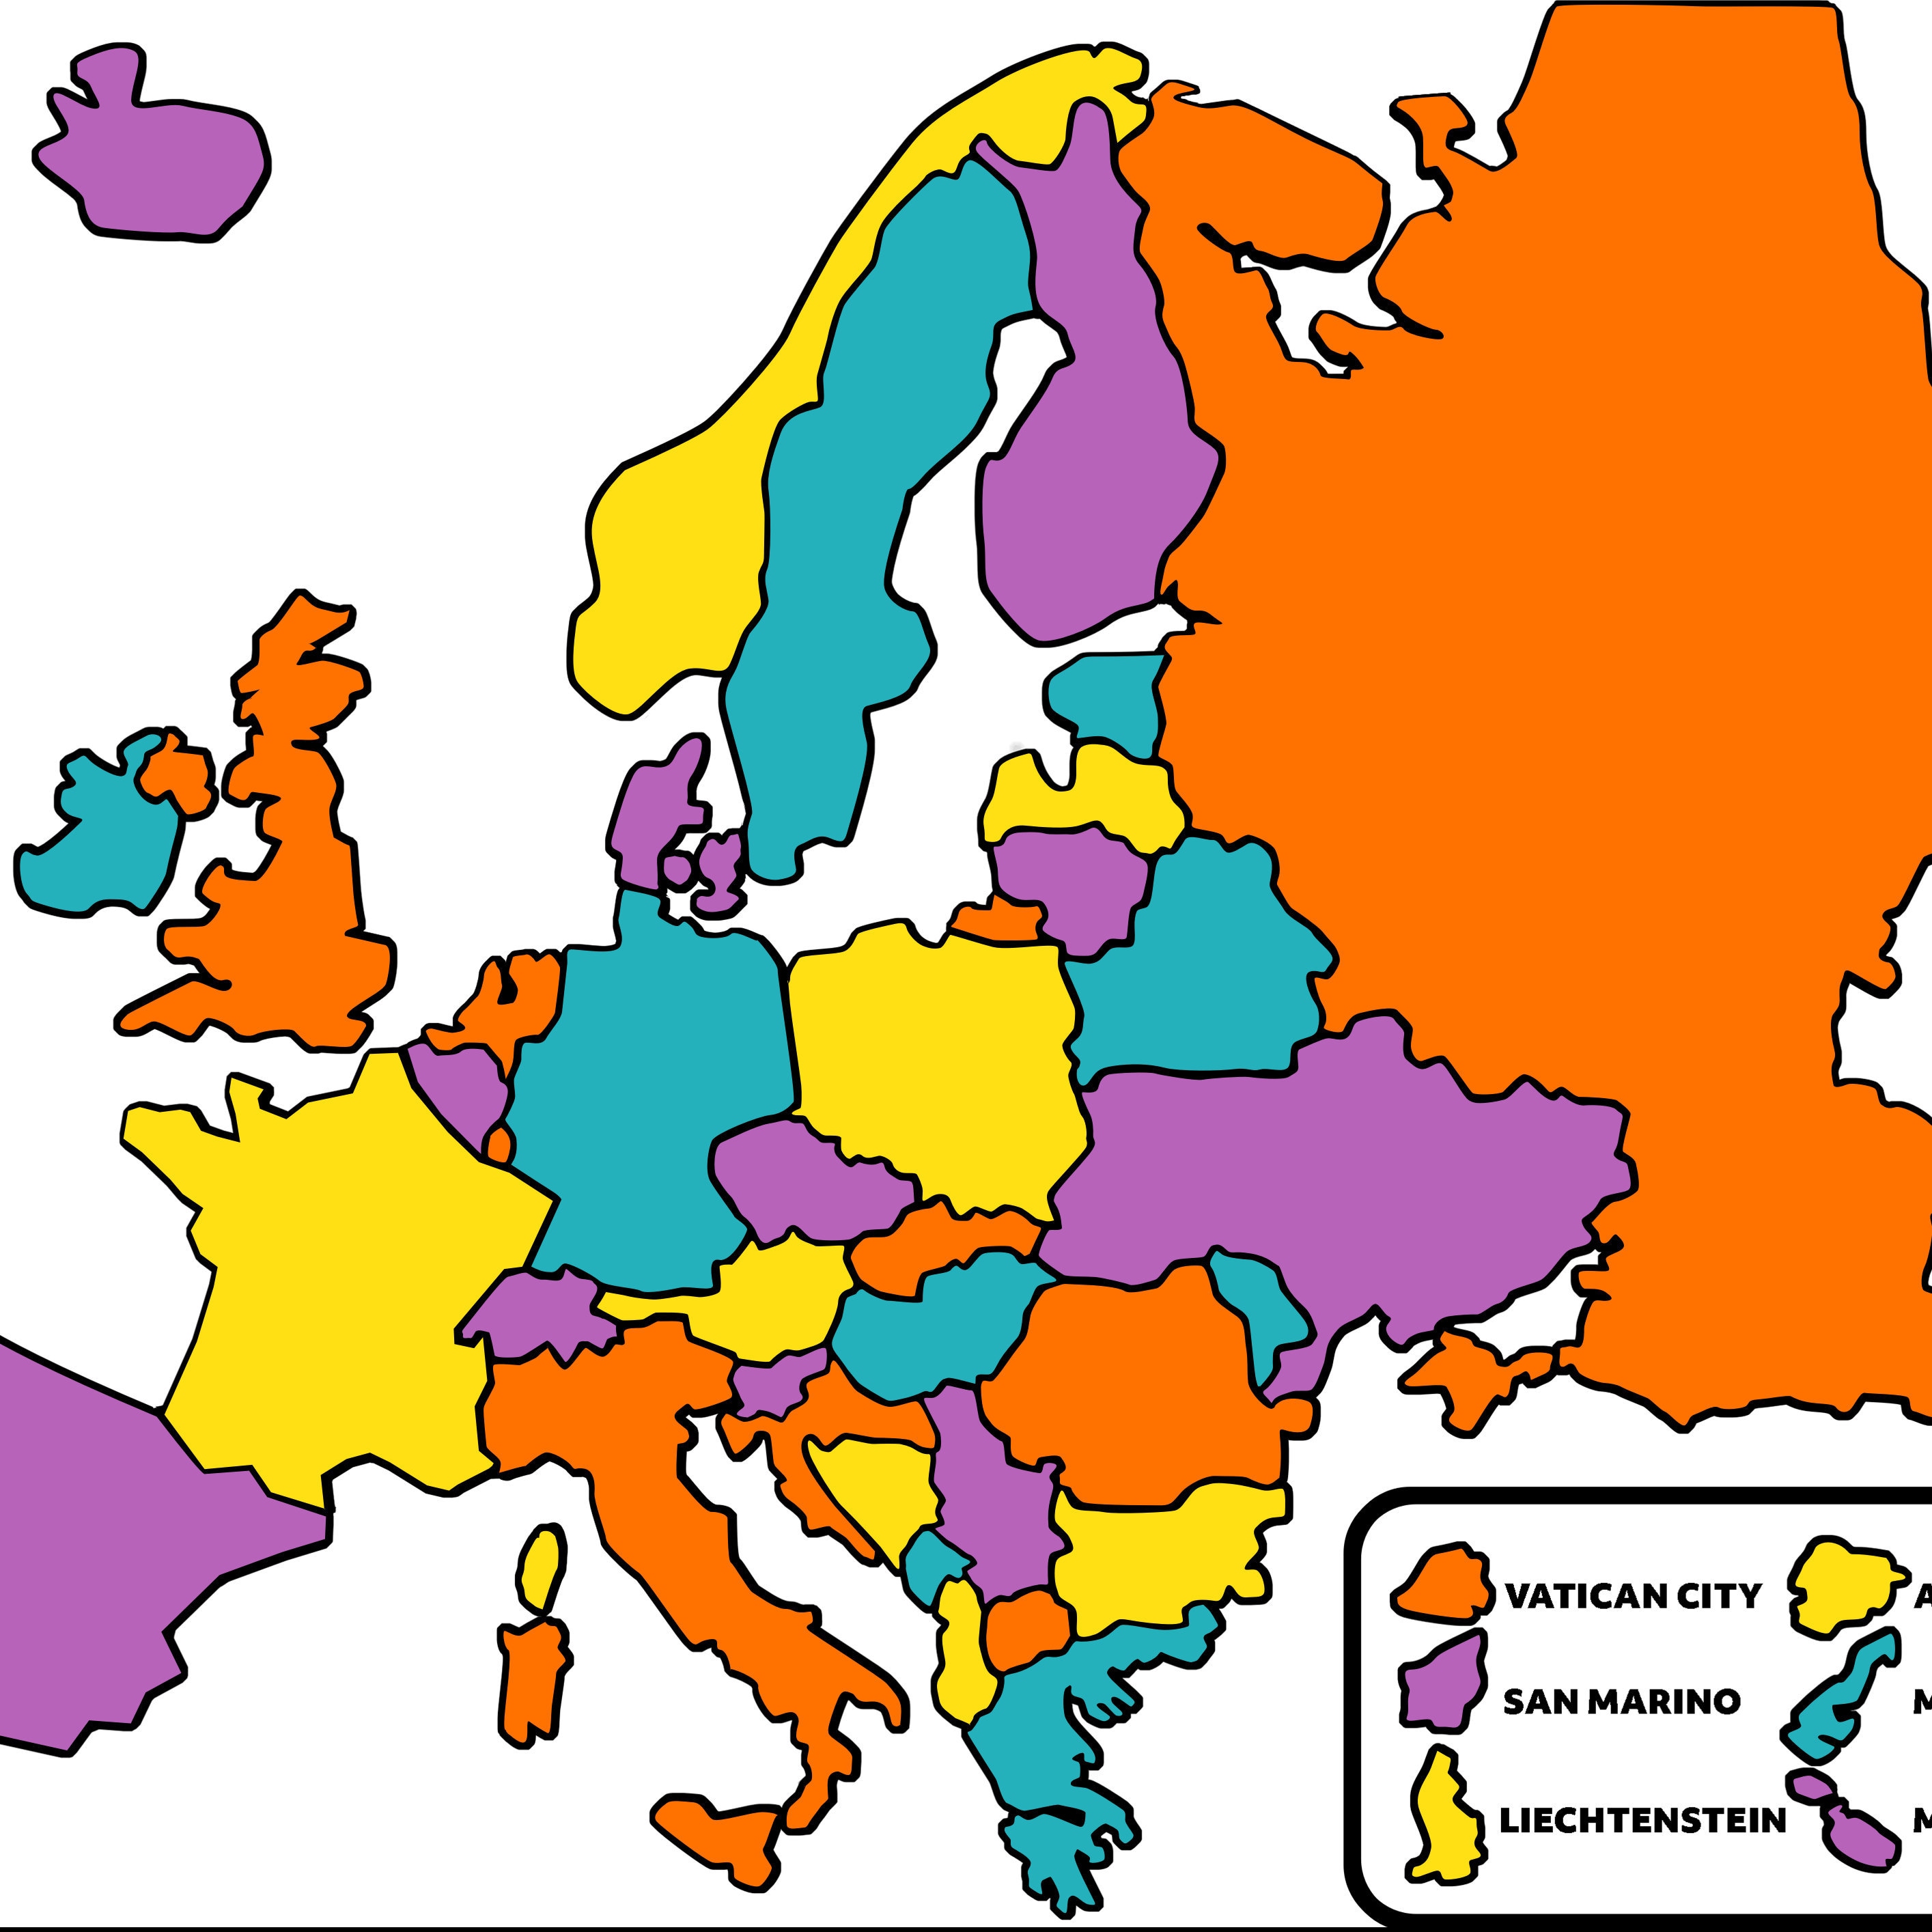 CARTINA EUROPEA ADESIVA PER CAMPER MAPPA EUROPA